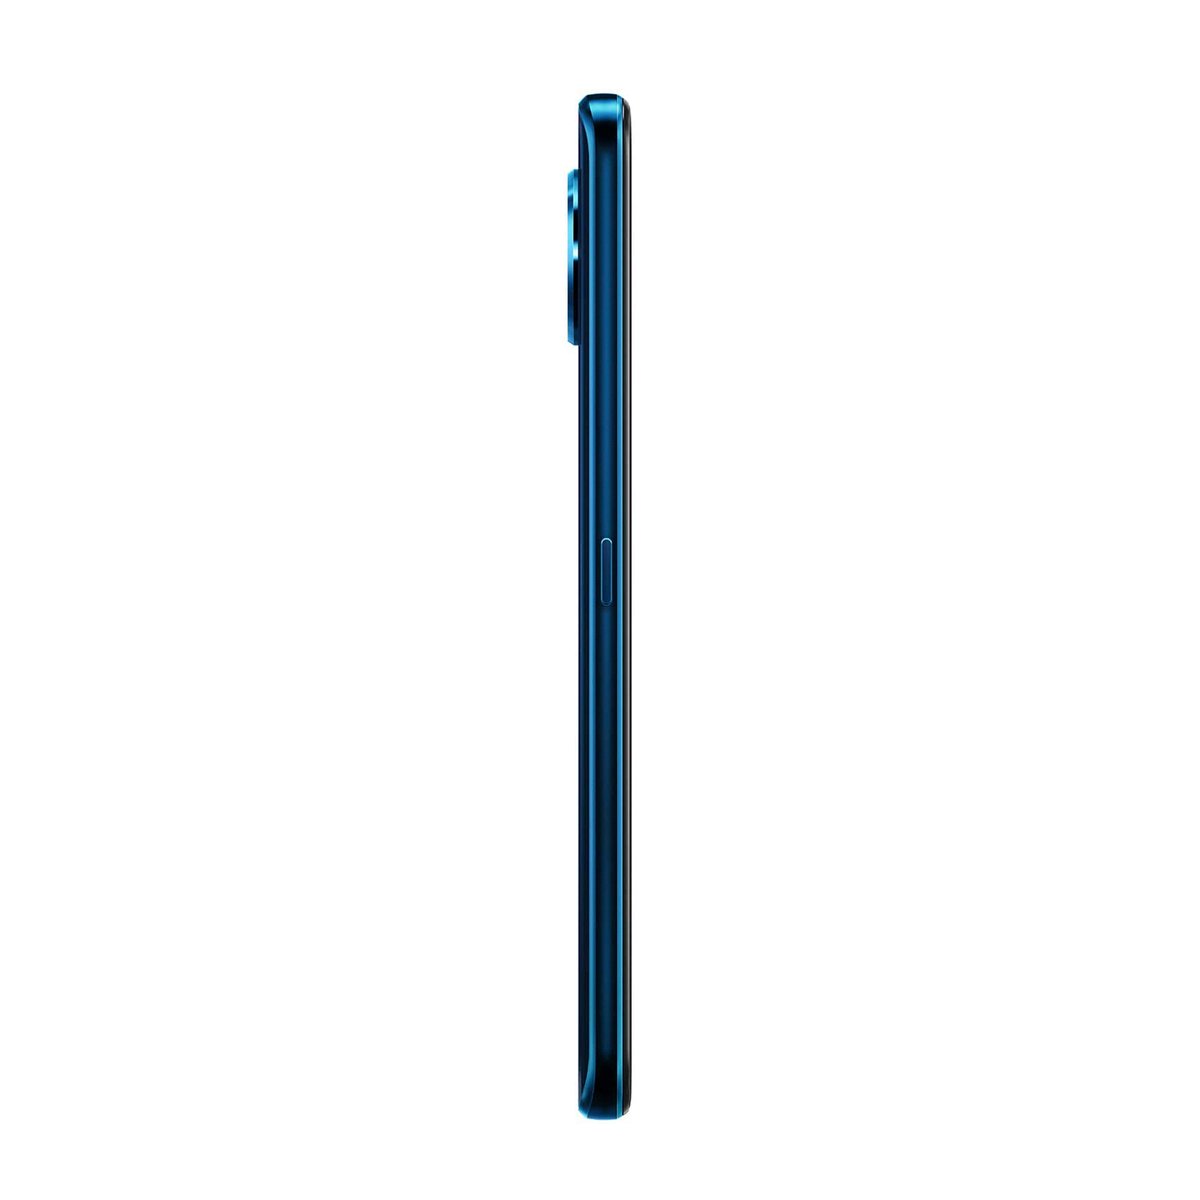 Nokia 8.3 128GB 5G Blue